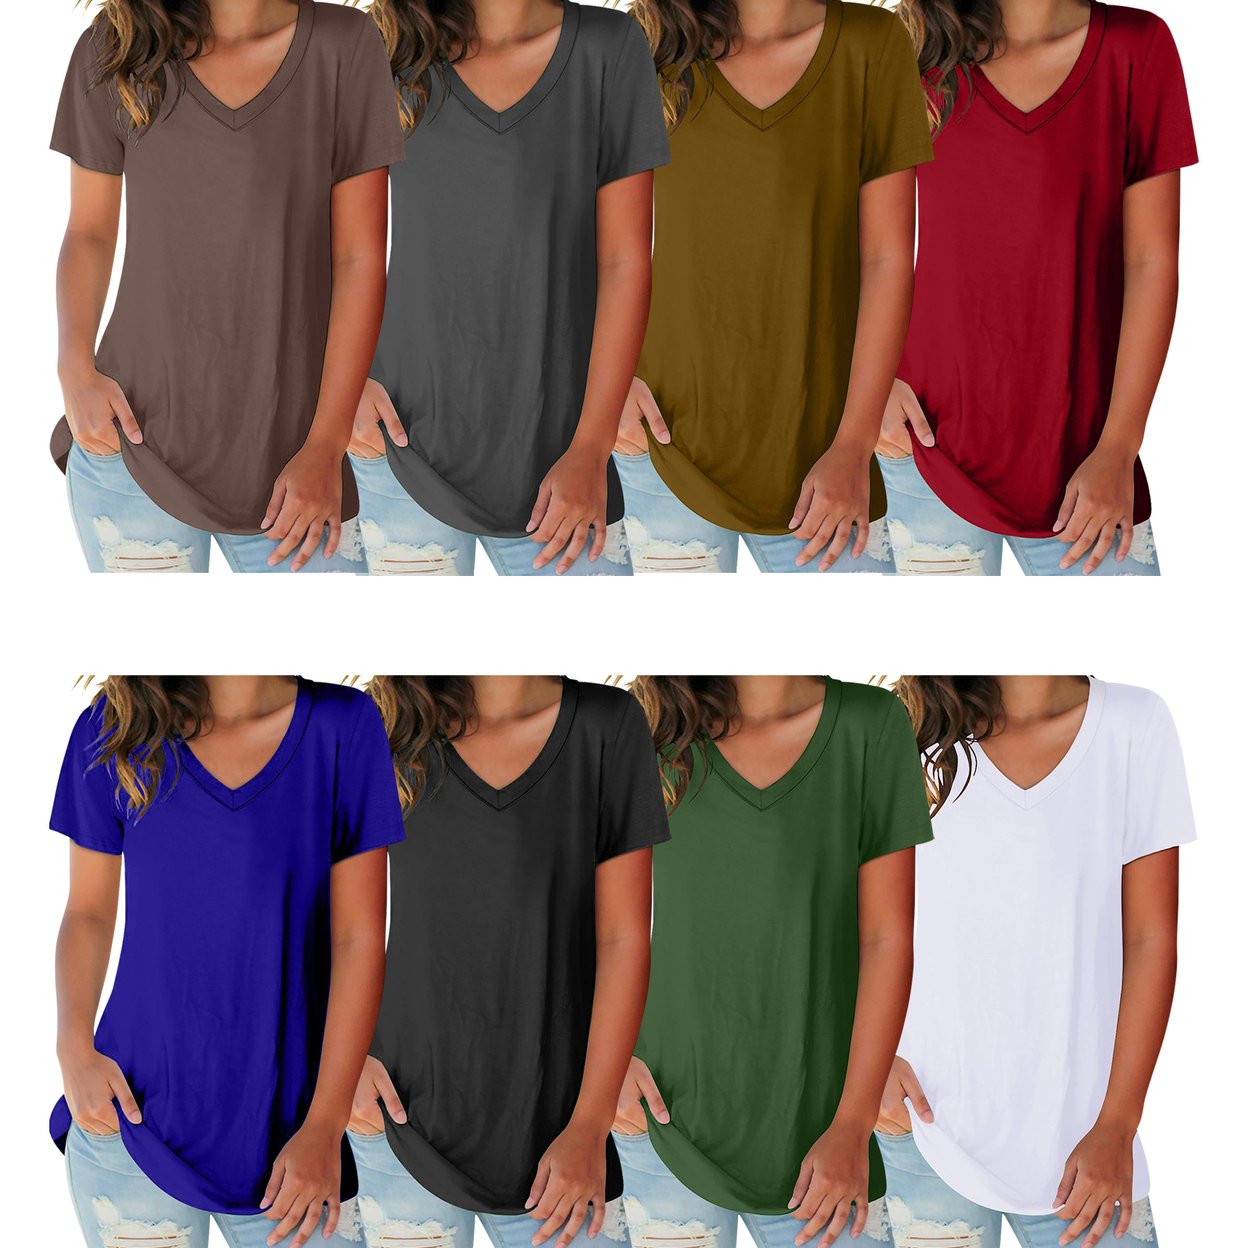 3-Pack: Women's Ultra Soft Smooth Cotton Blend Basic V-Neck Short Sleeve Shirts - Black, Navy, Green, X-large